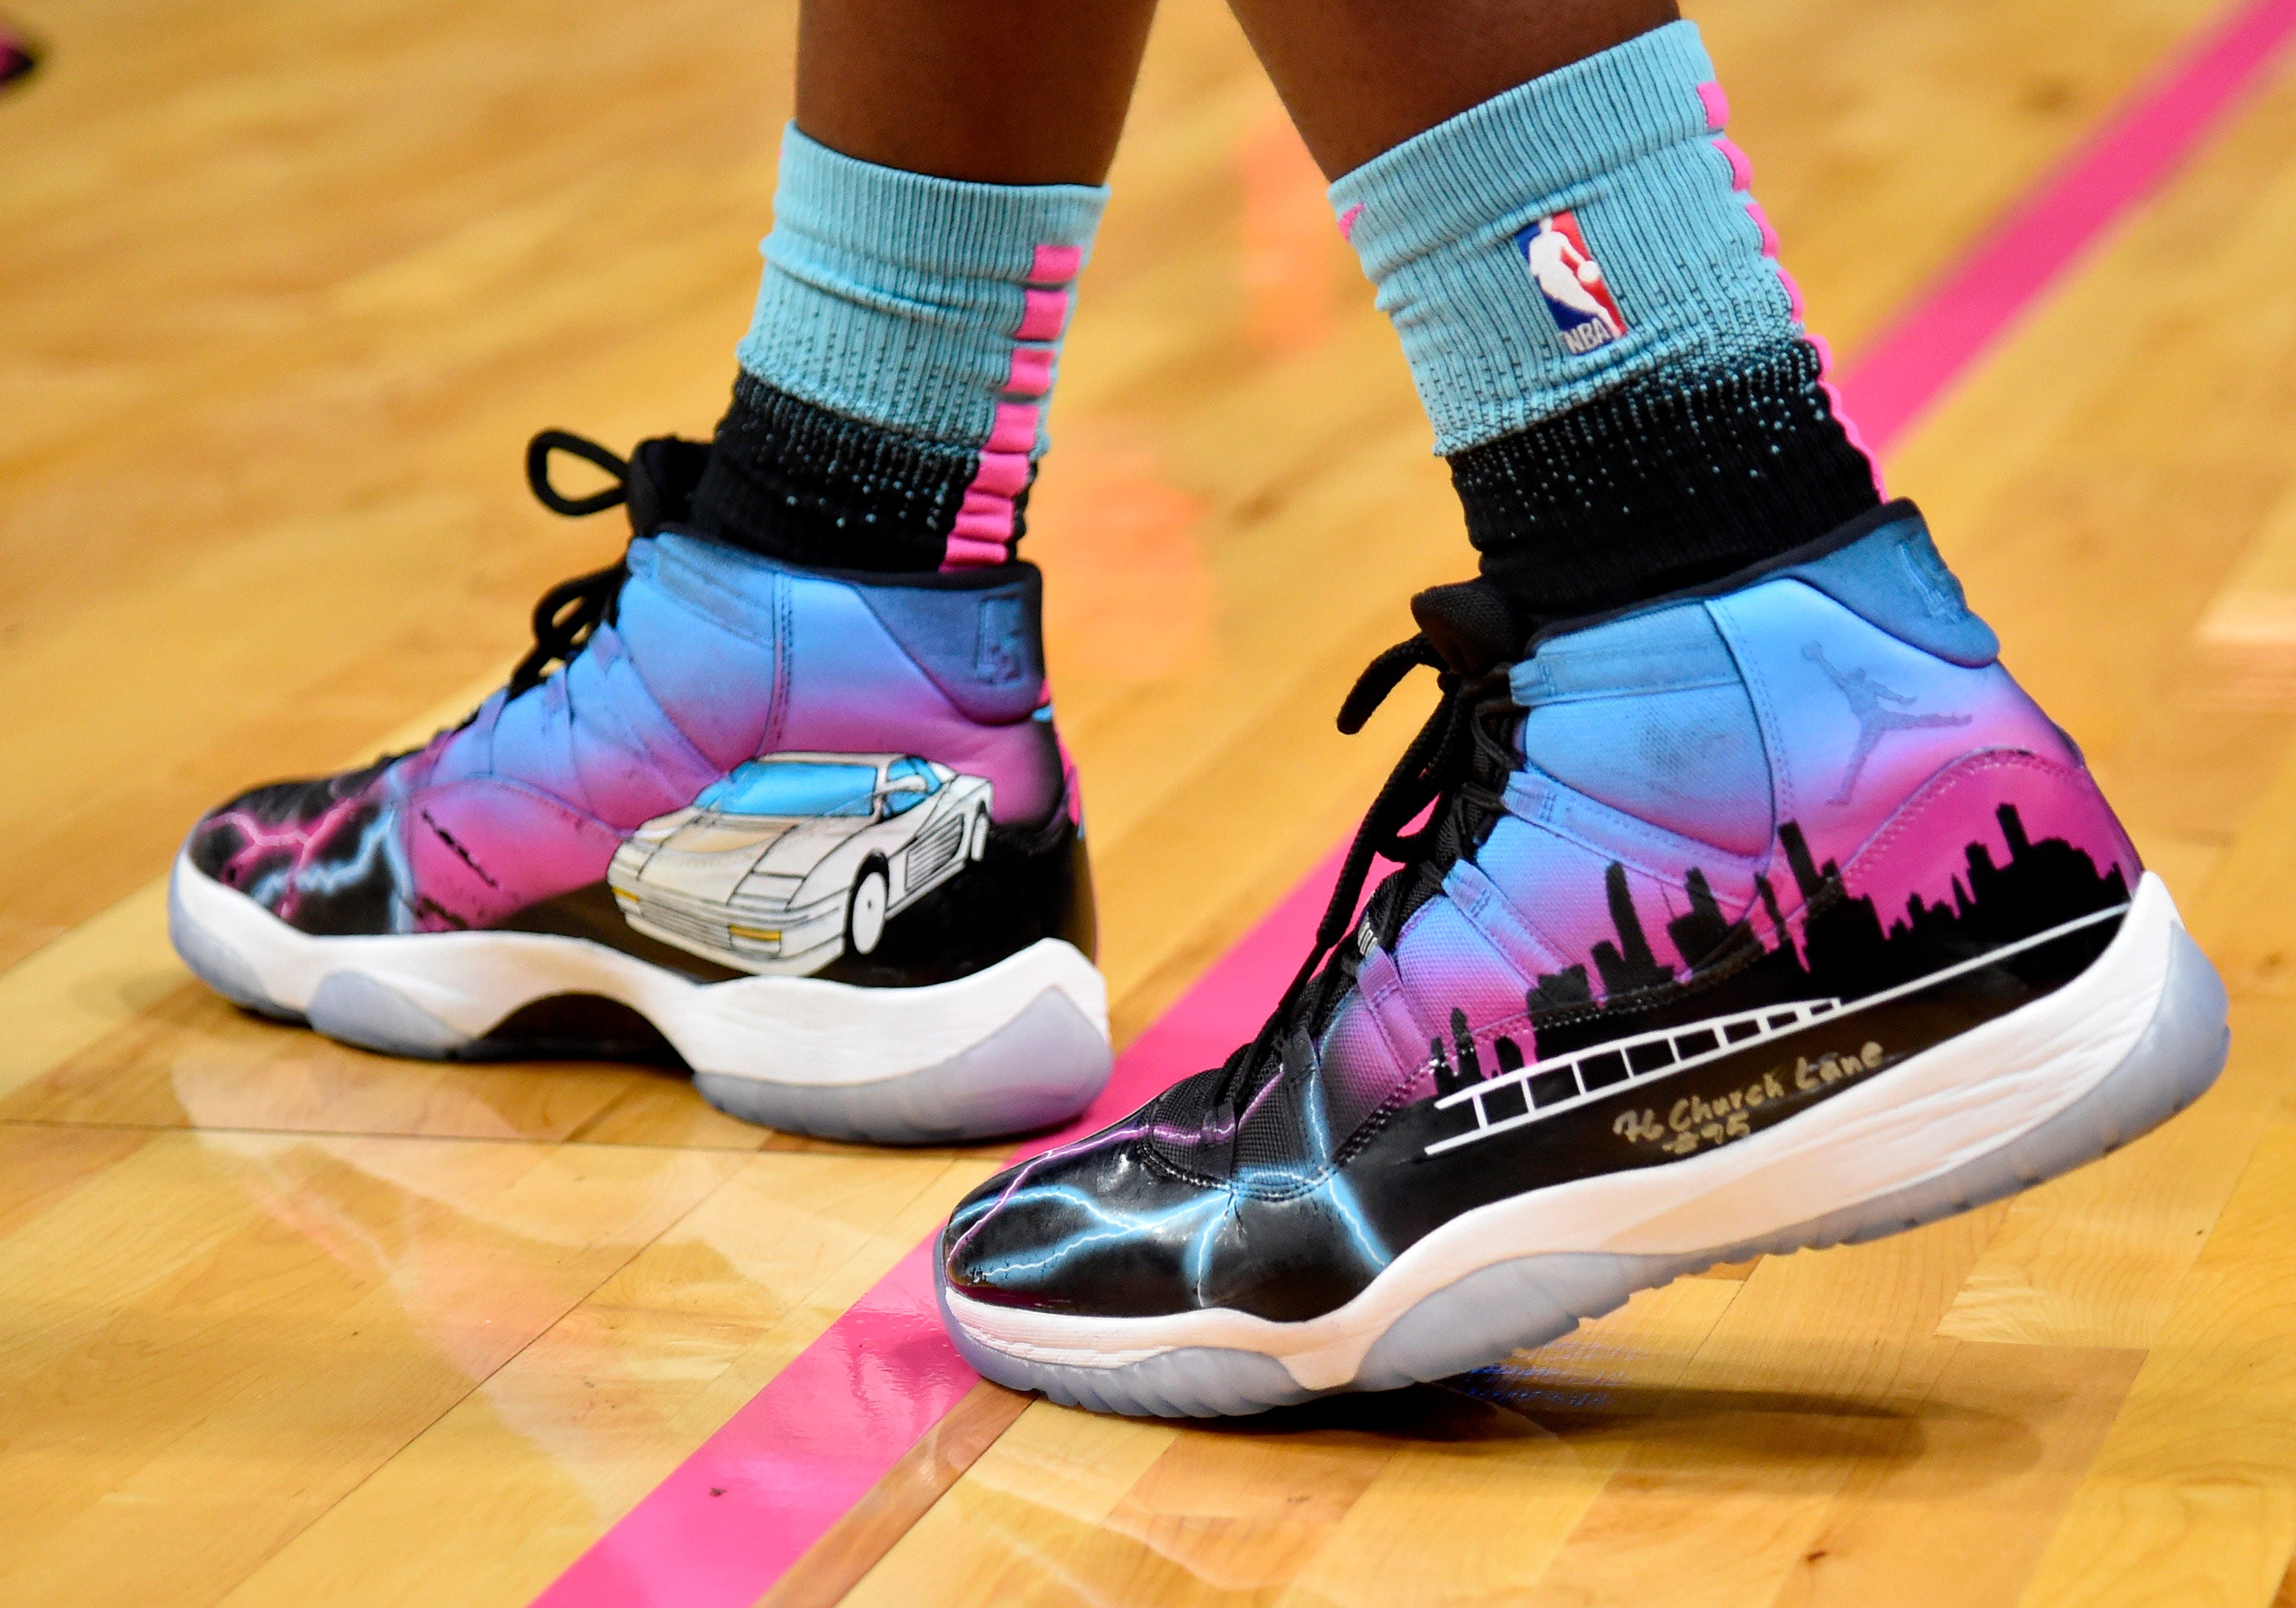 Custom sneakers for NBA stars created 